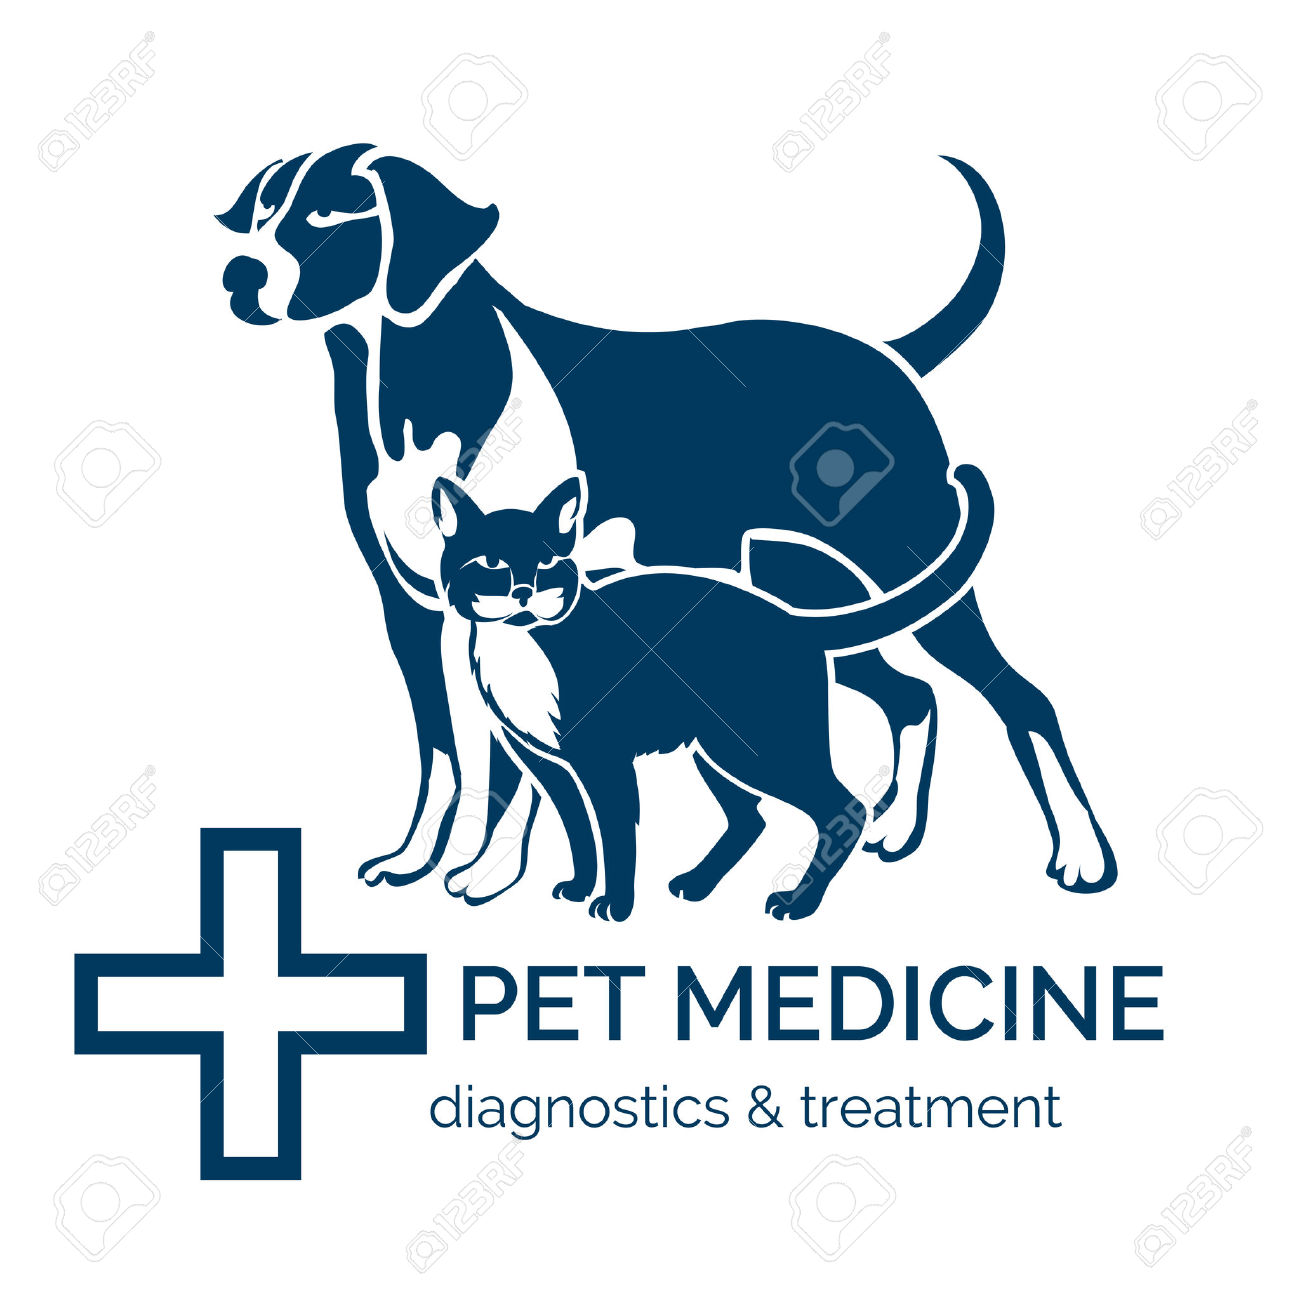 36808006-Pet-clinic-logo-Stock-Photo.jpg